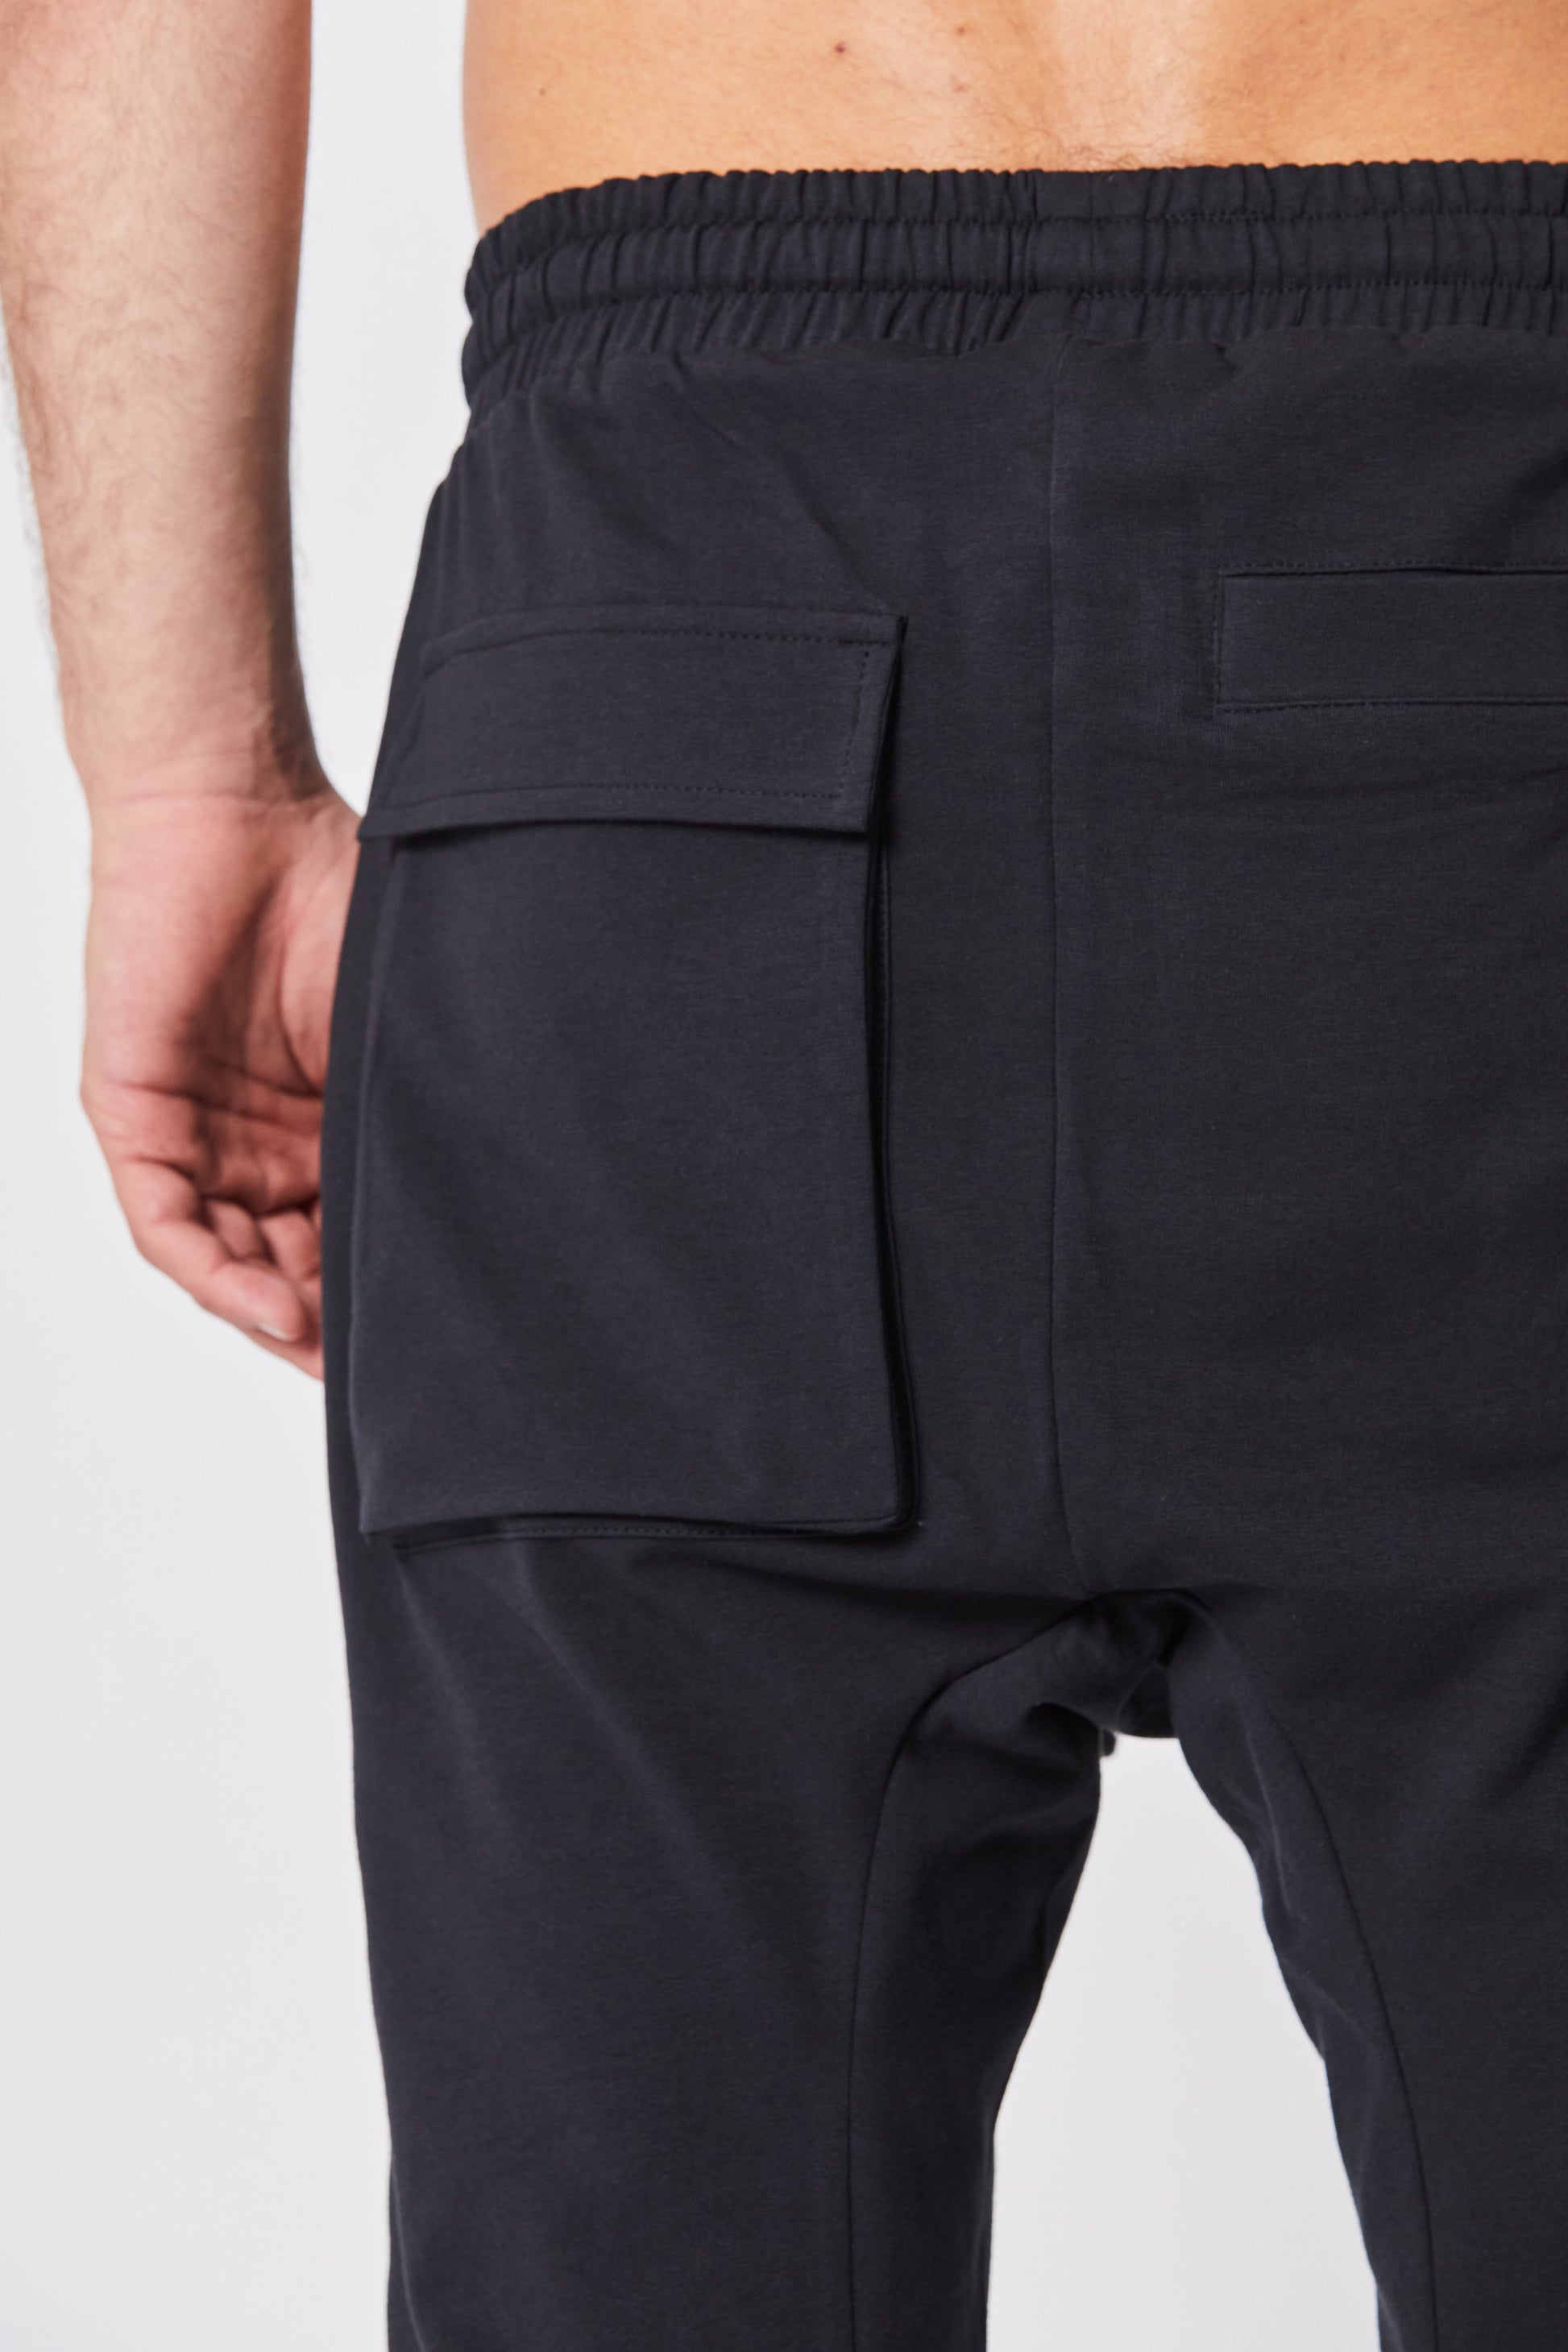 Black Stretch Archive Modal MST The – 379 Crotch Cotton Shorts Drop